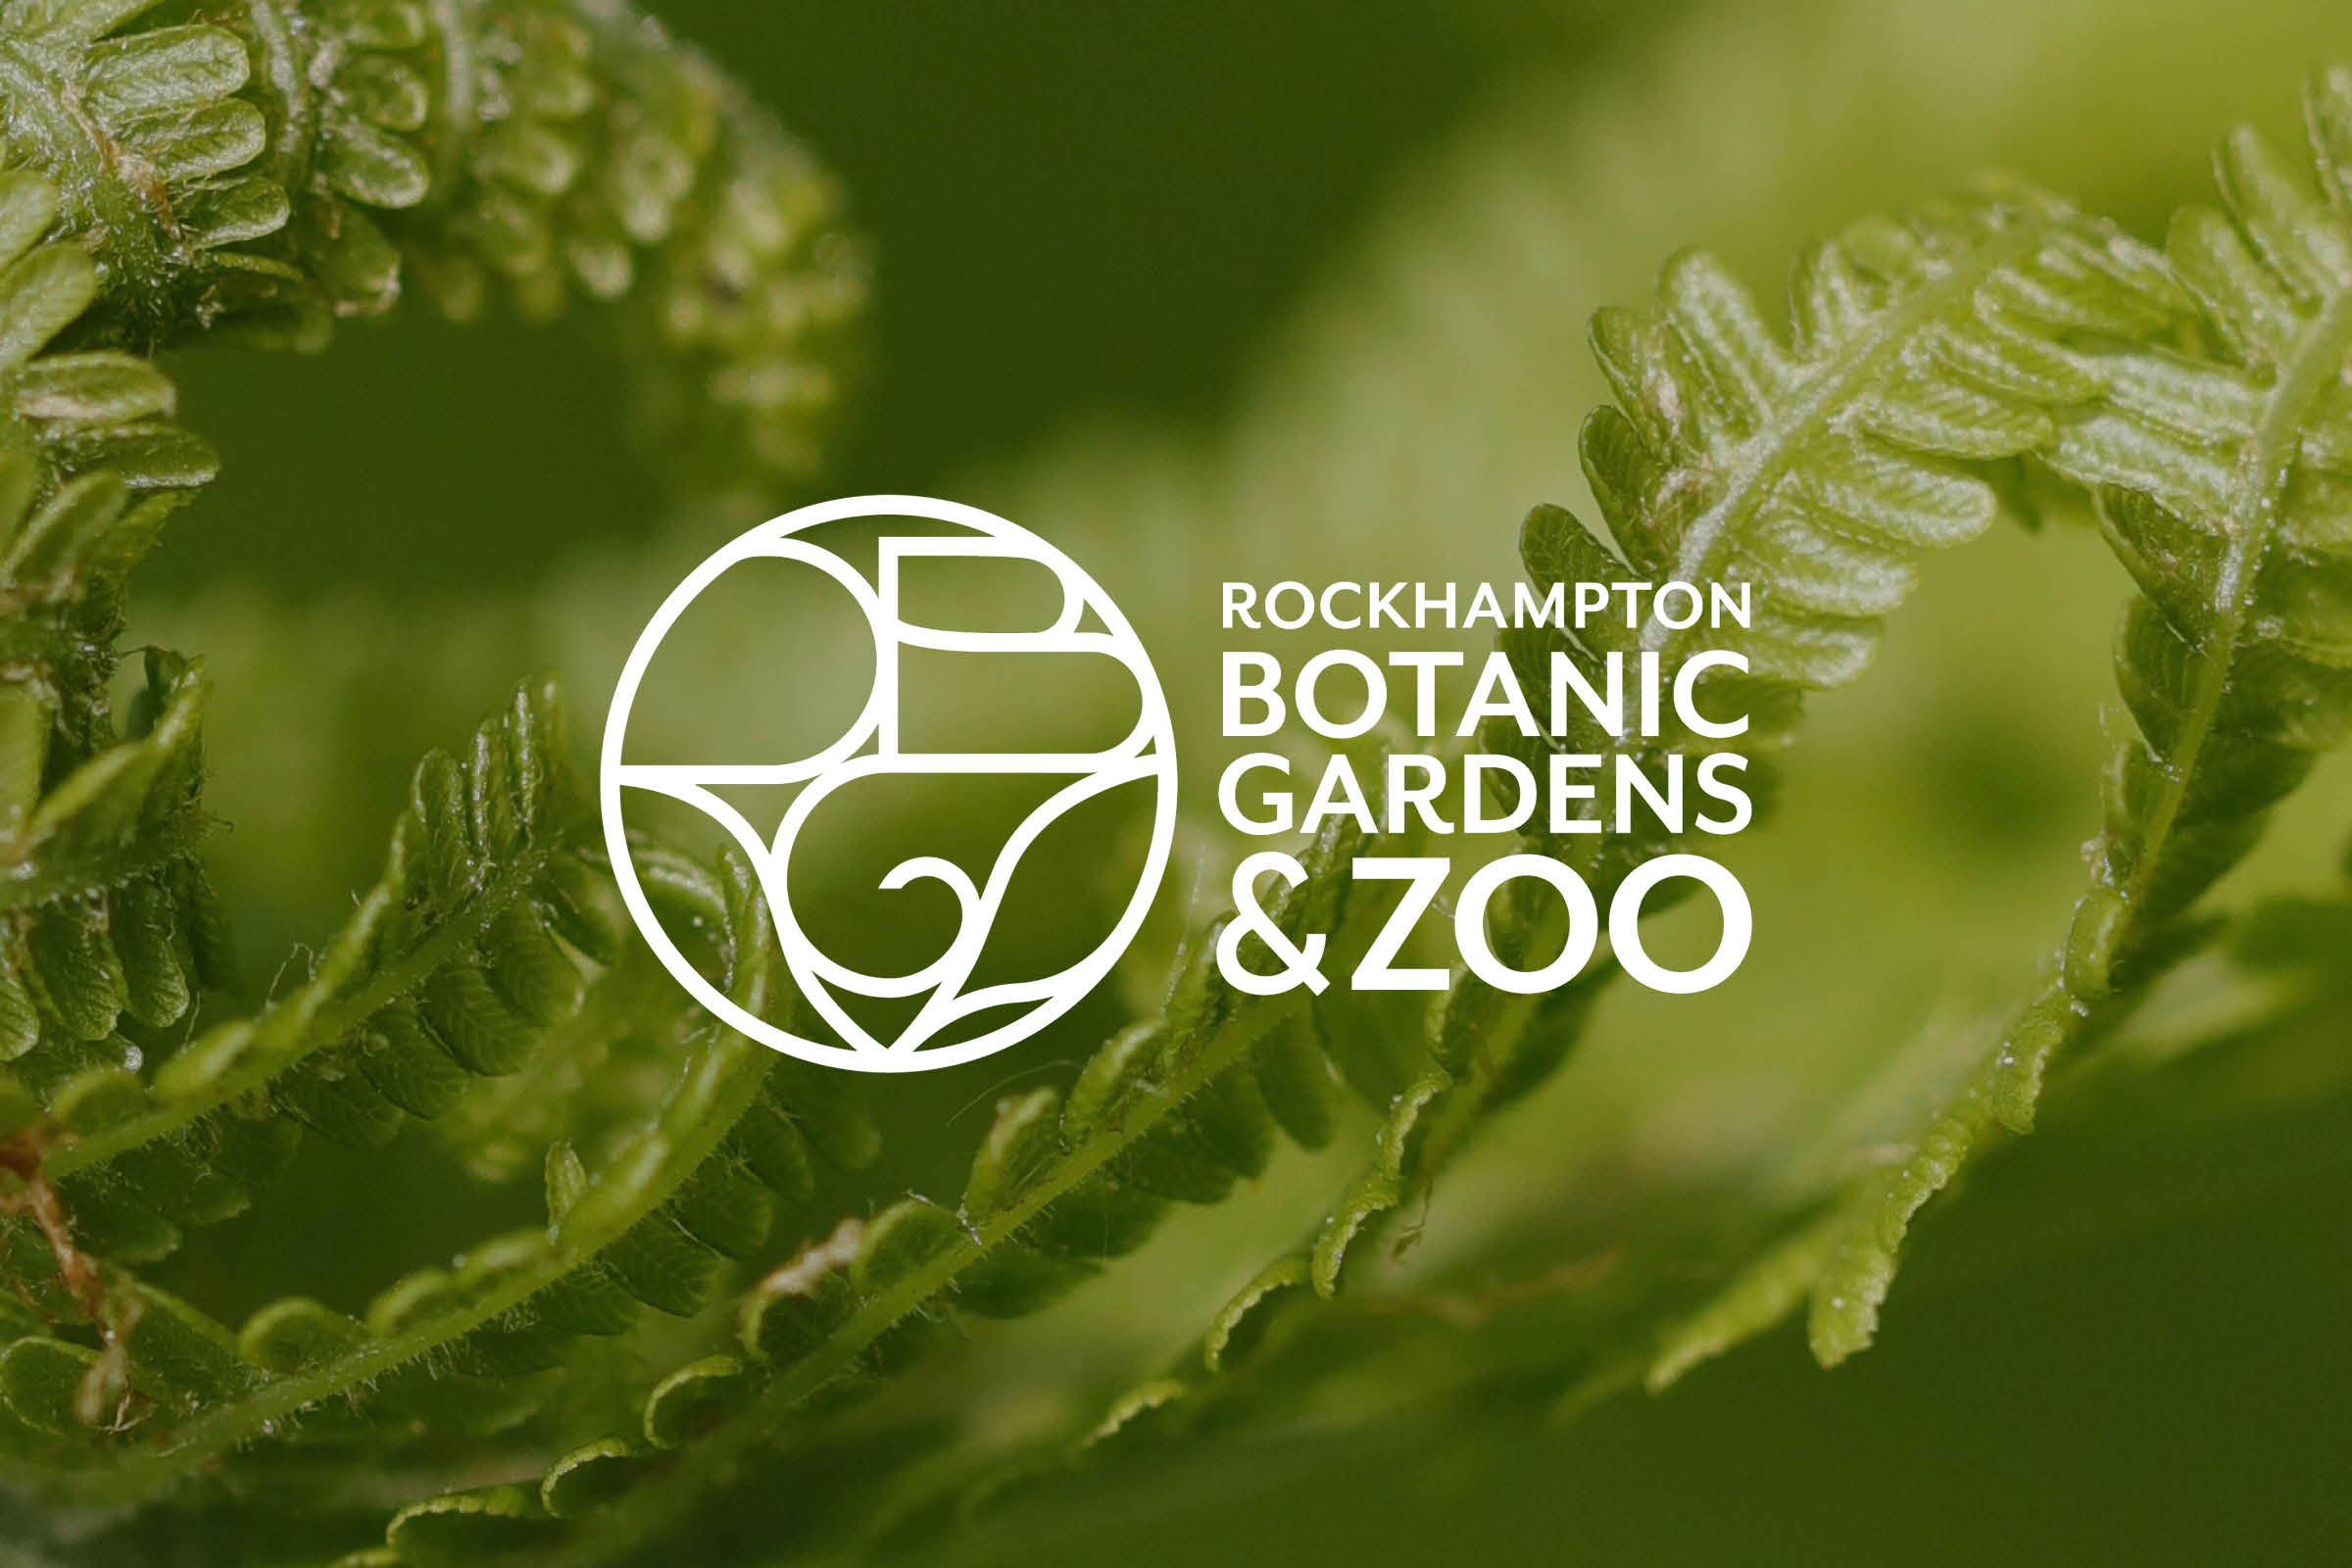 Rockhampton Botanic Gardens and Zoo branding